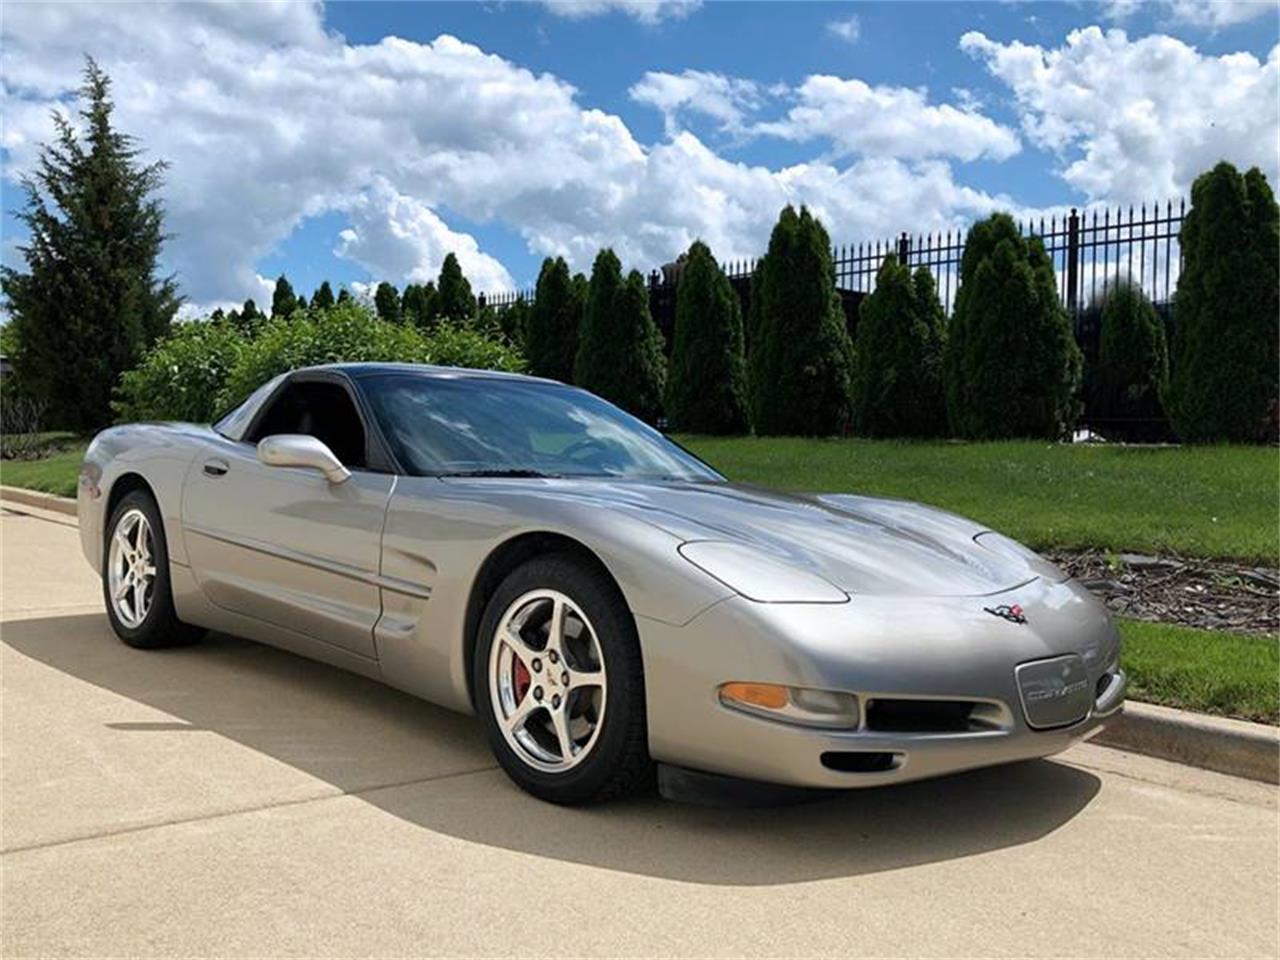 2000 Corvette Common Issues